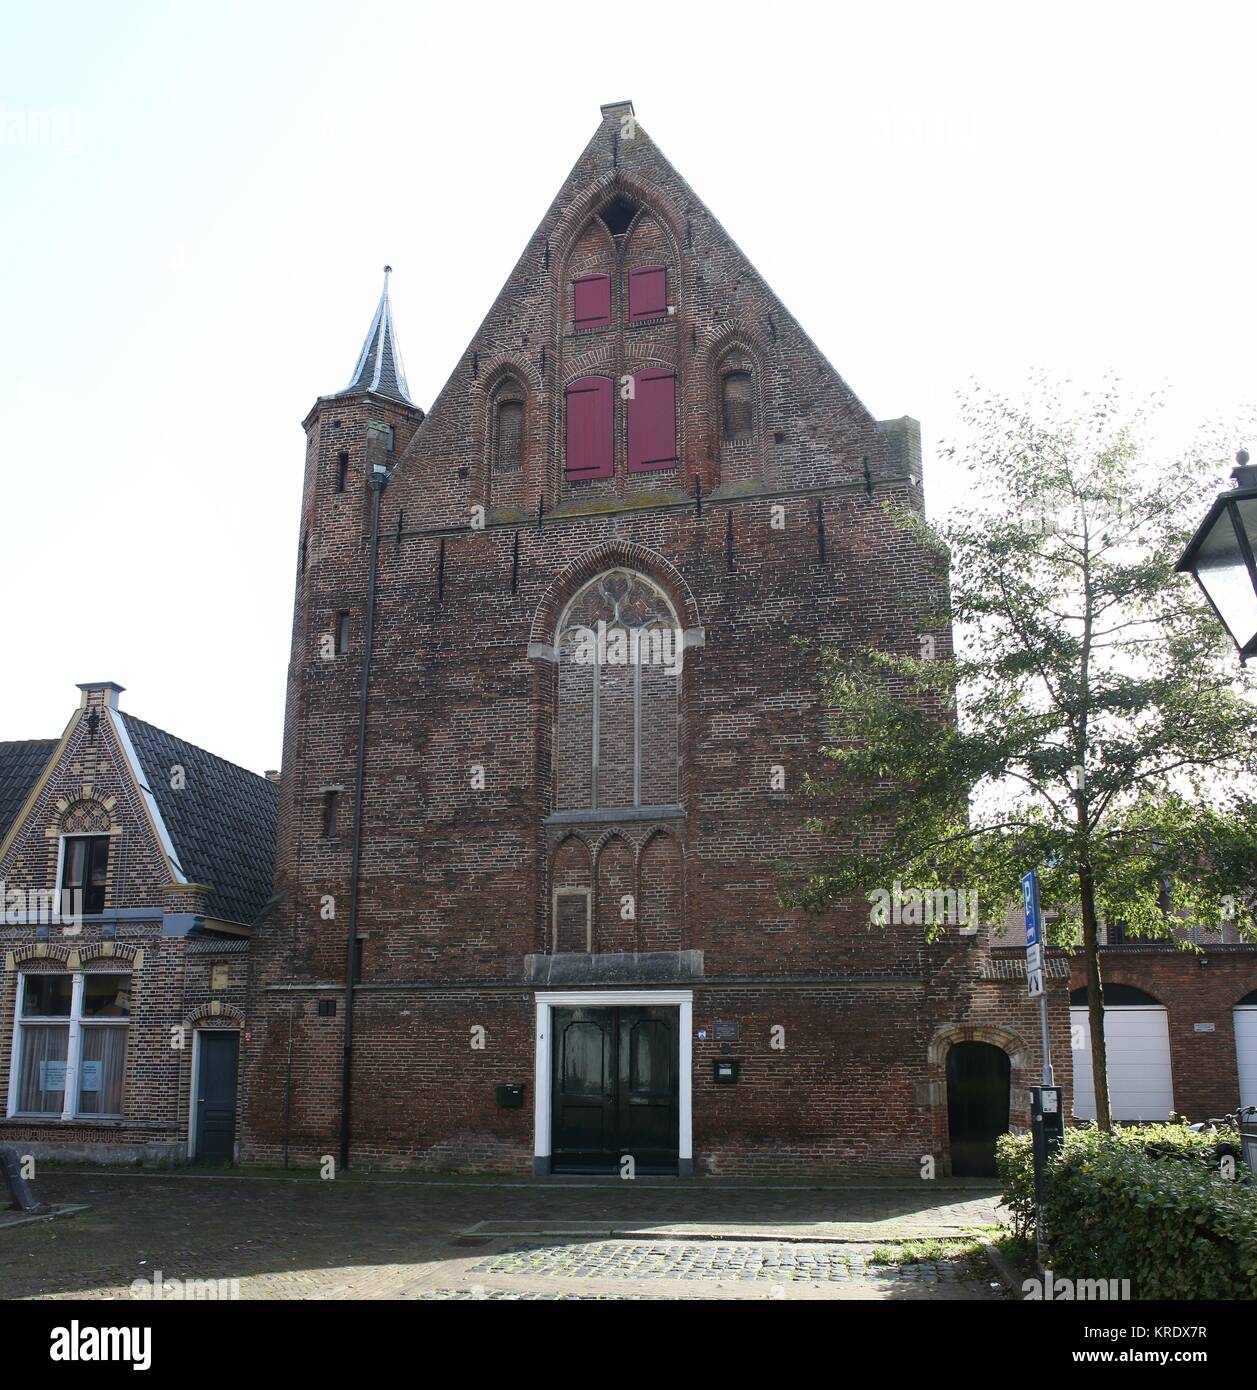 Waalse kerk (Walloon church,  Eglise Wallonne),  Calvinist church in Zwolle, The Netherlands at Schoutenstraat. Church building dates from 1500. Stock Photo